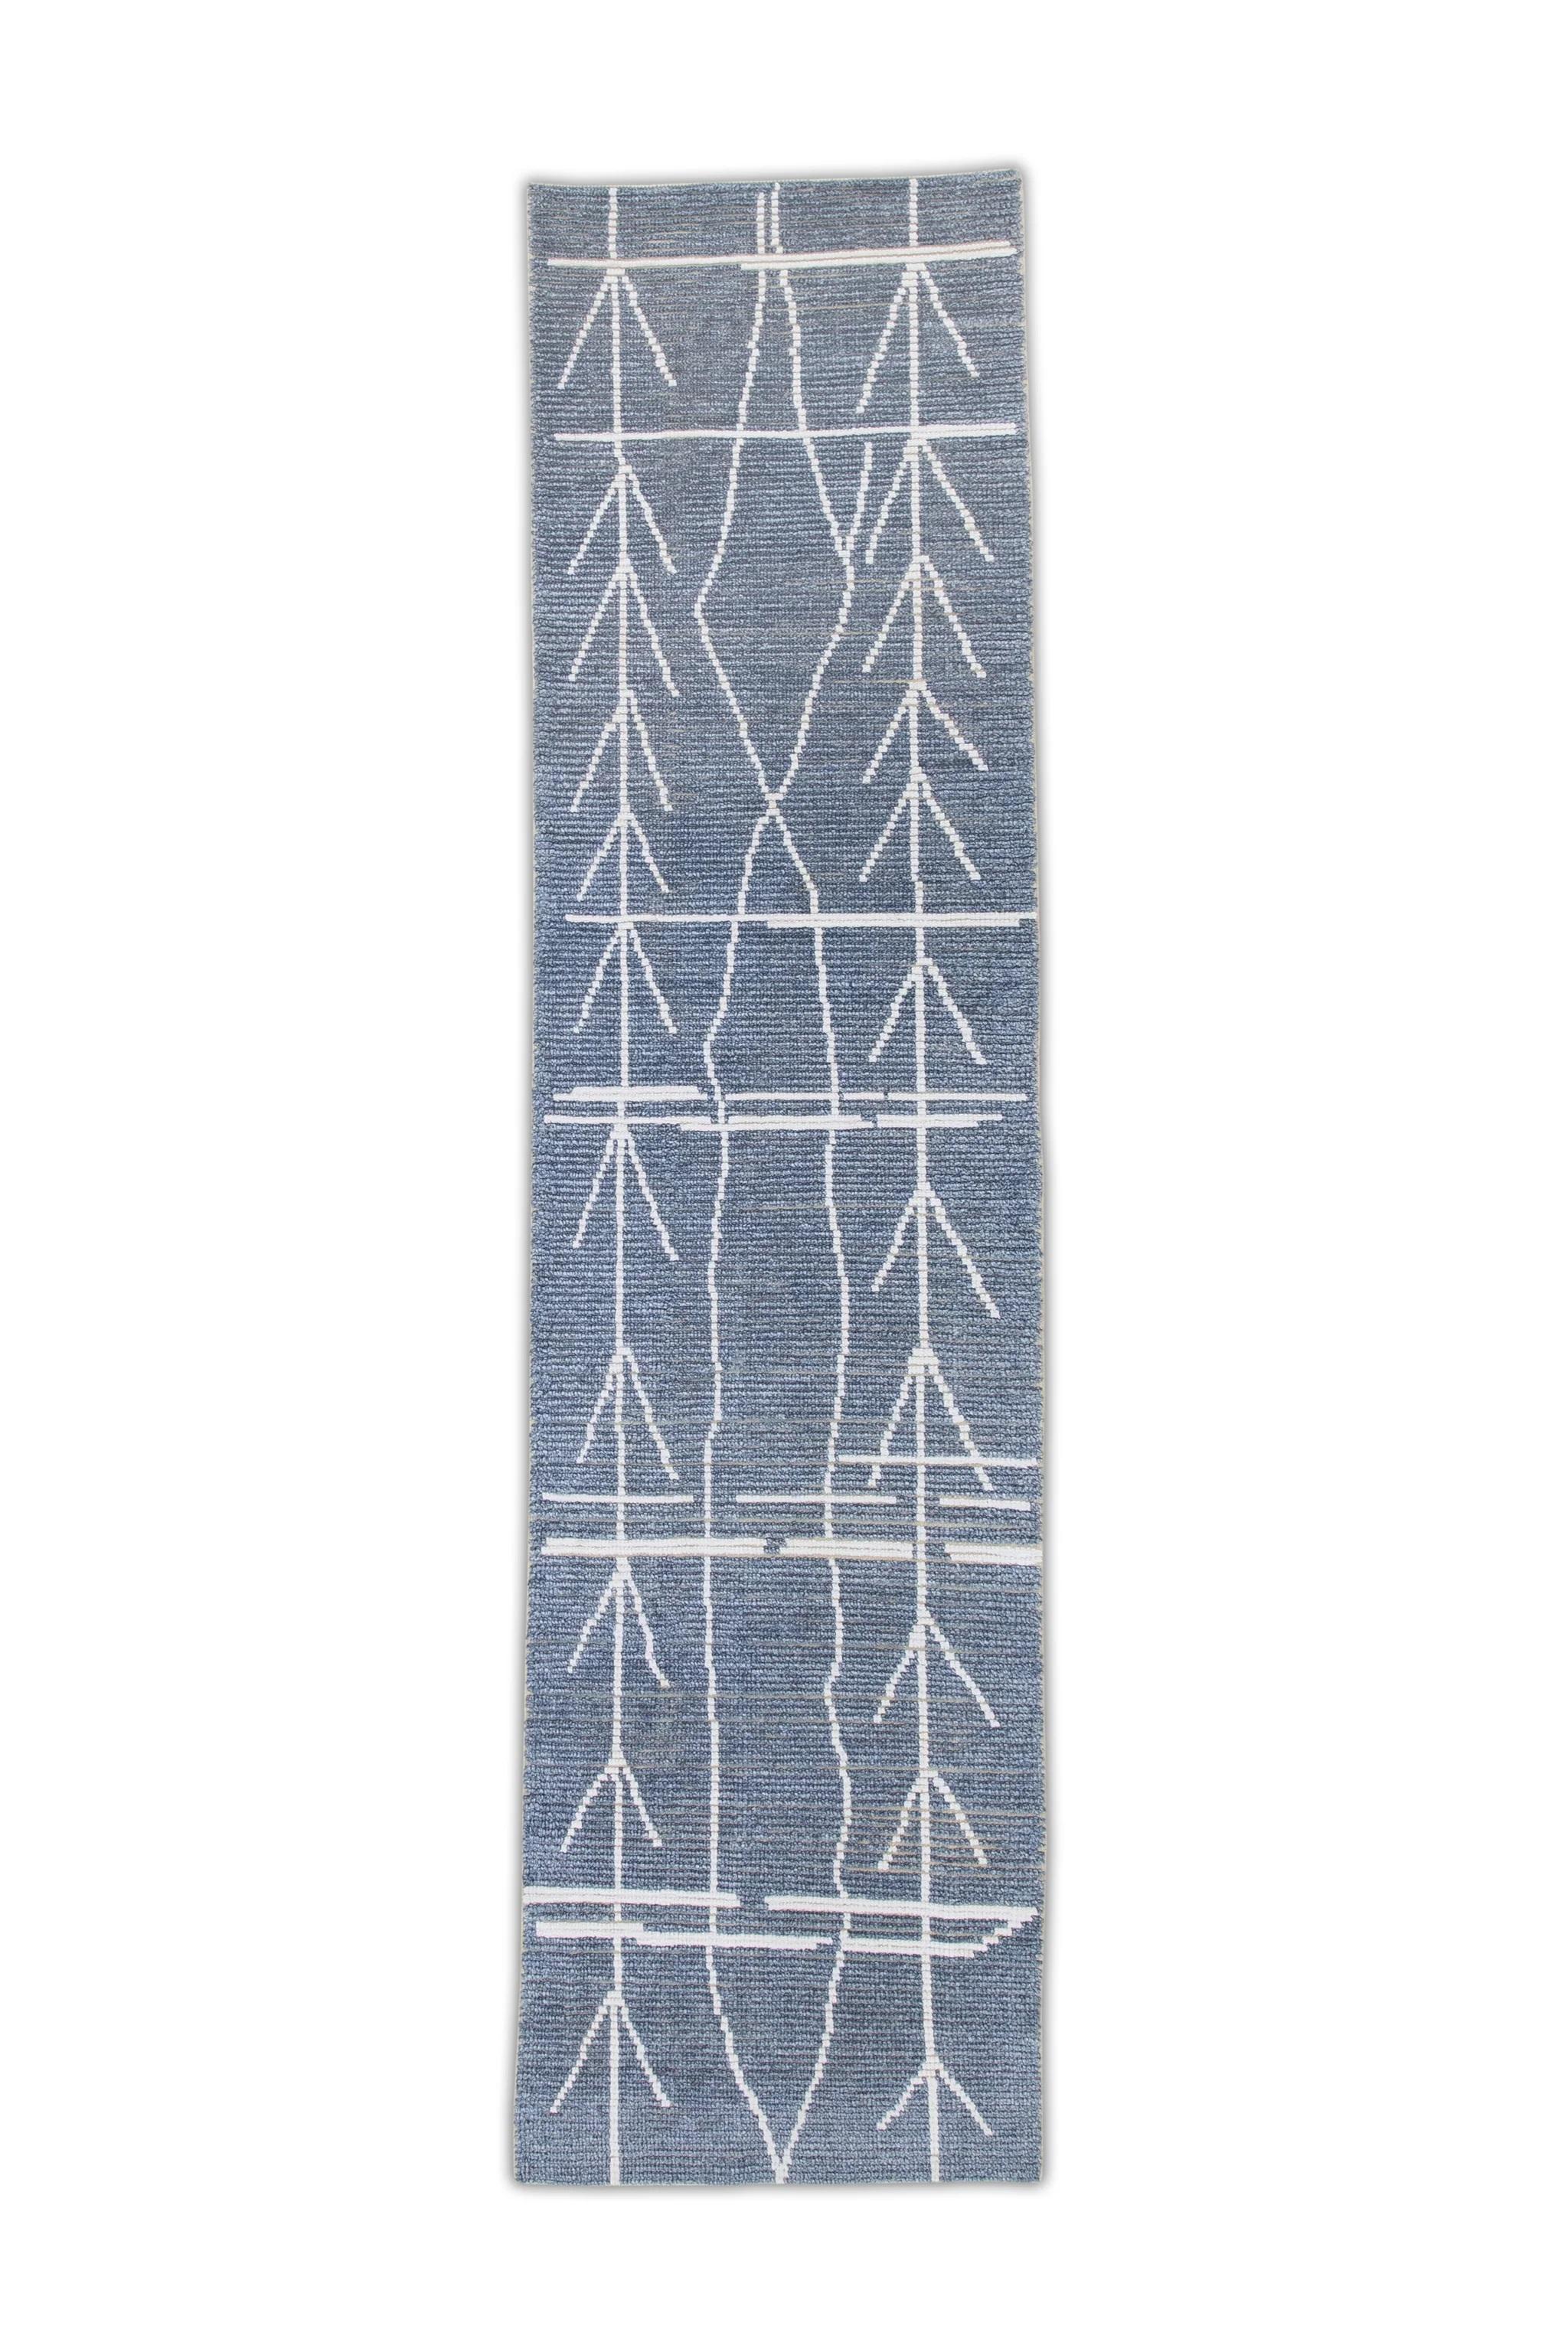 Blue Modern Handmade Wool Tulu Runner in Geometric Design 2'10